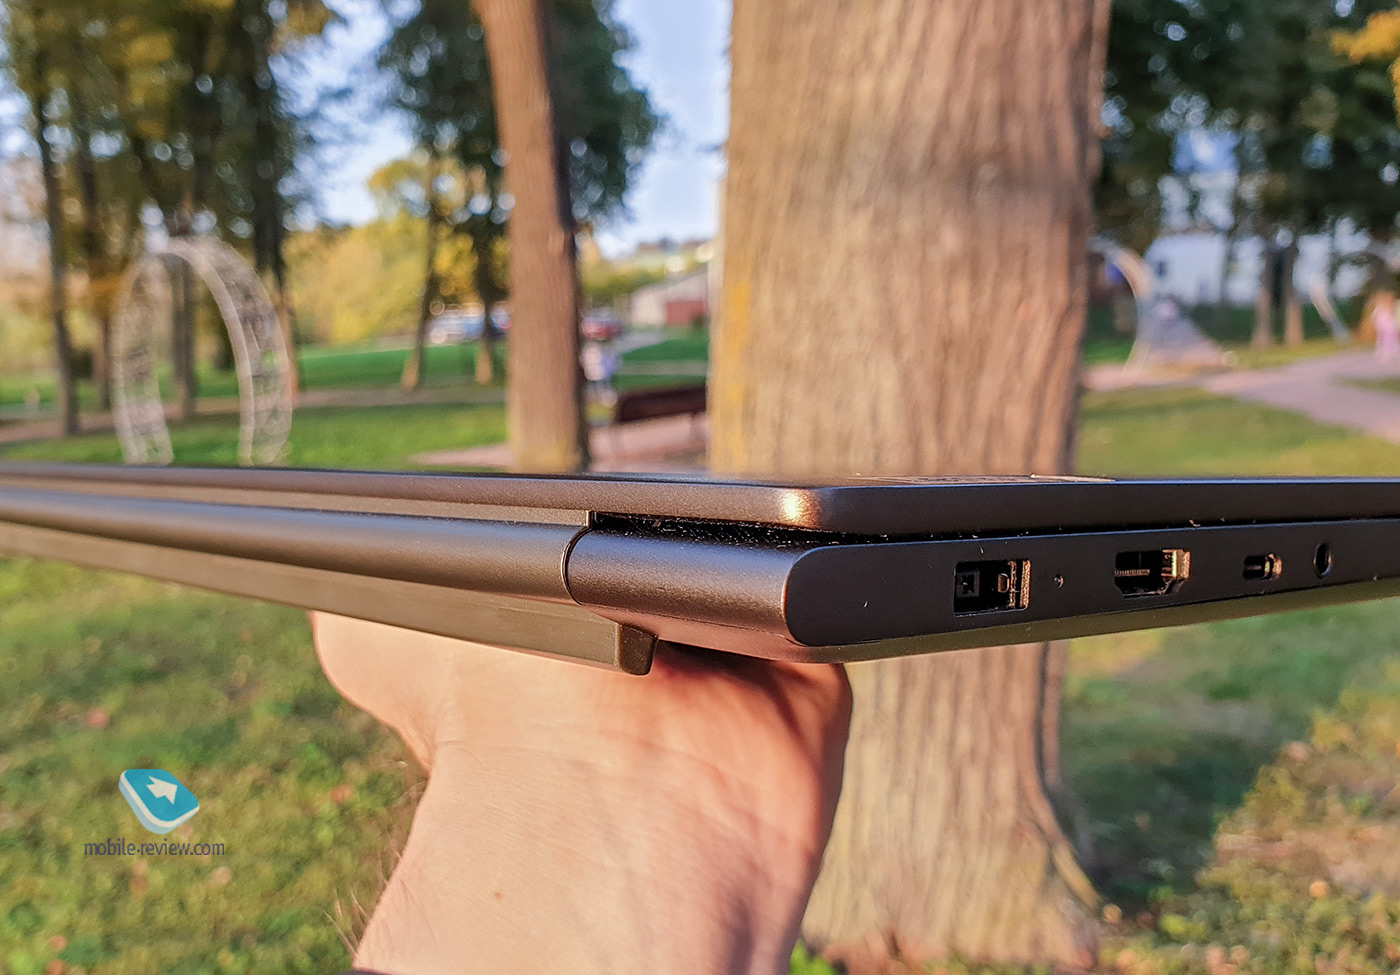 Lenovo Yoga 7 Creator: Affordable Laptop Designed for Creative